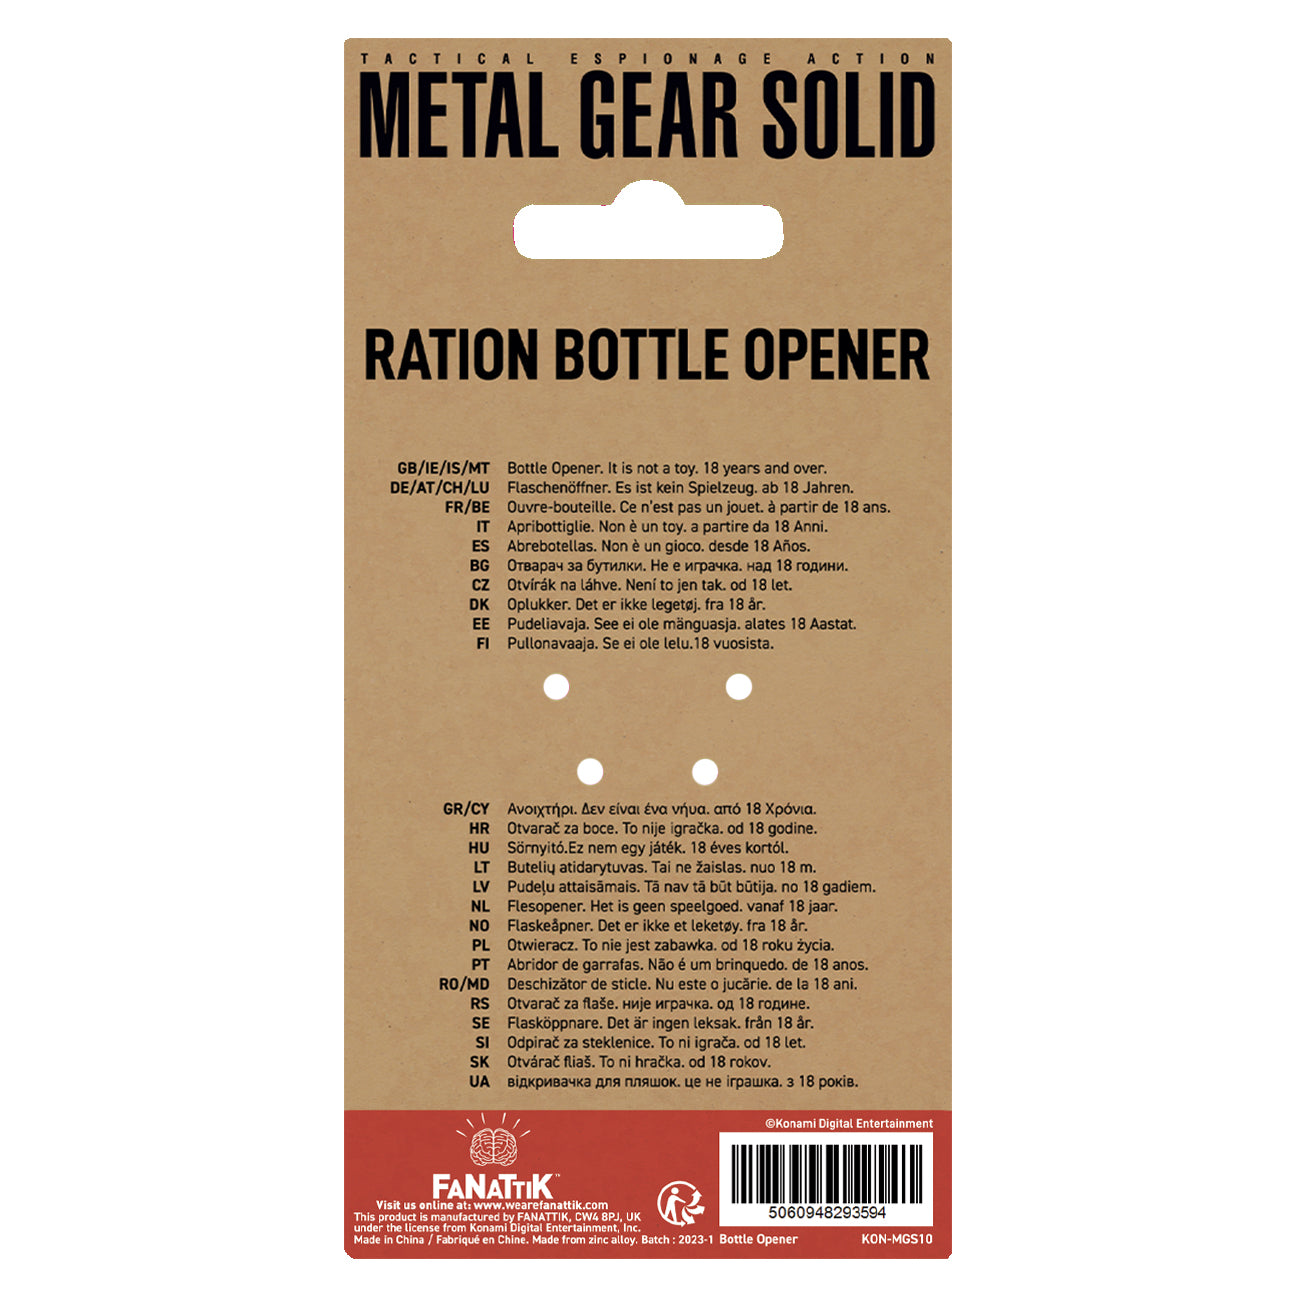 Metal Gear Solid Ration Bottle Opener